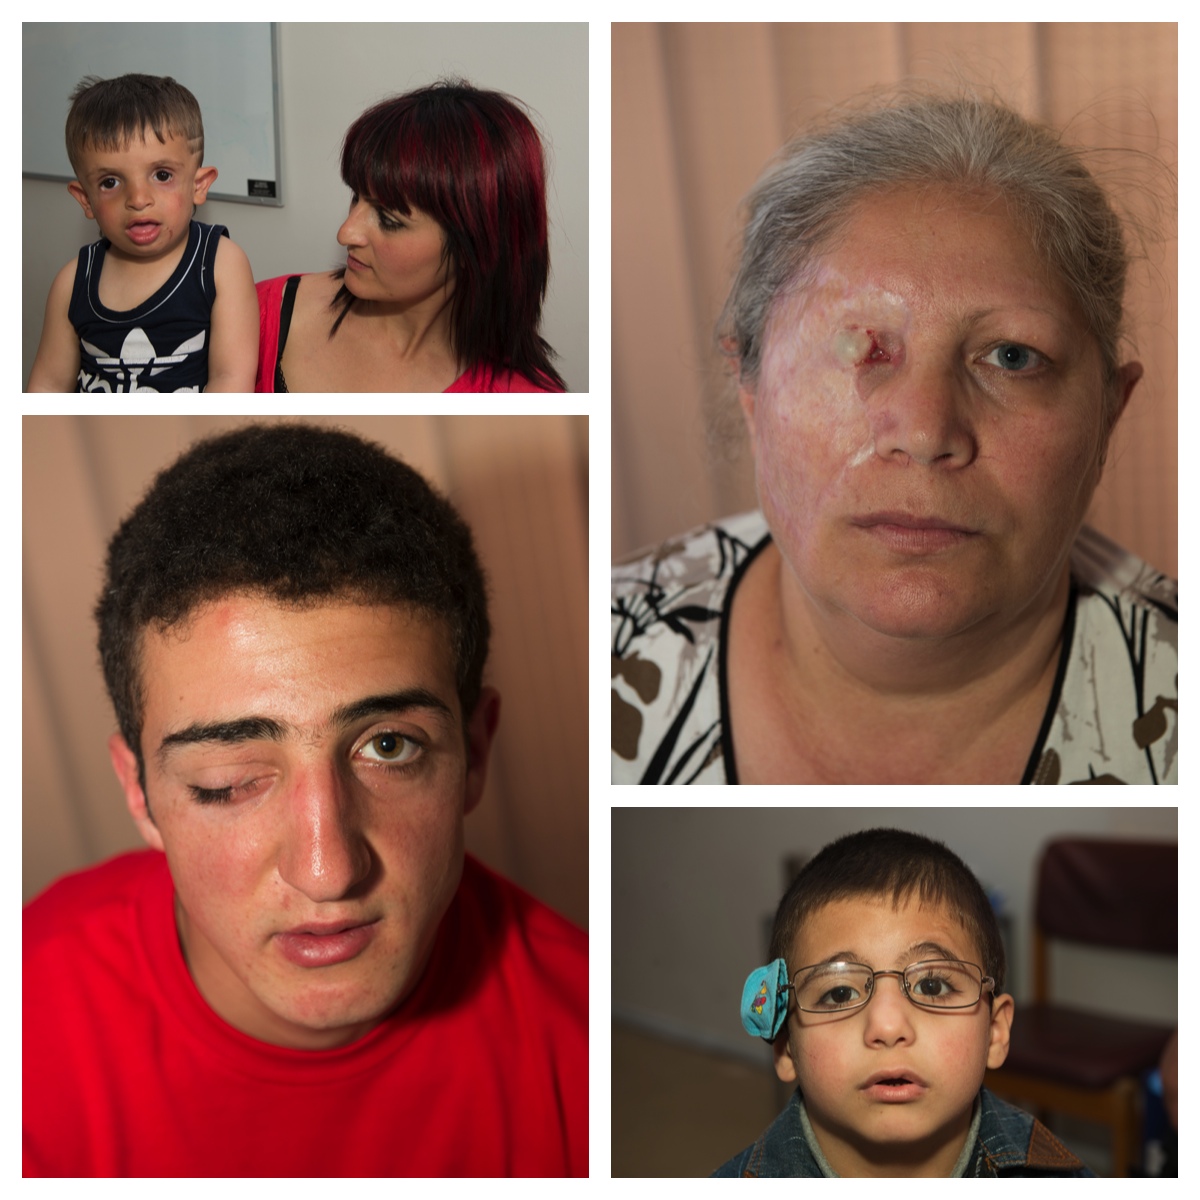 Armenia eye patients